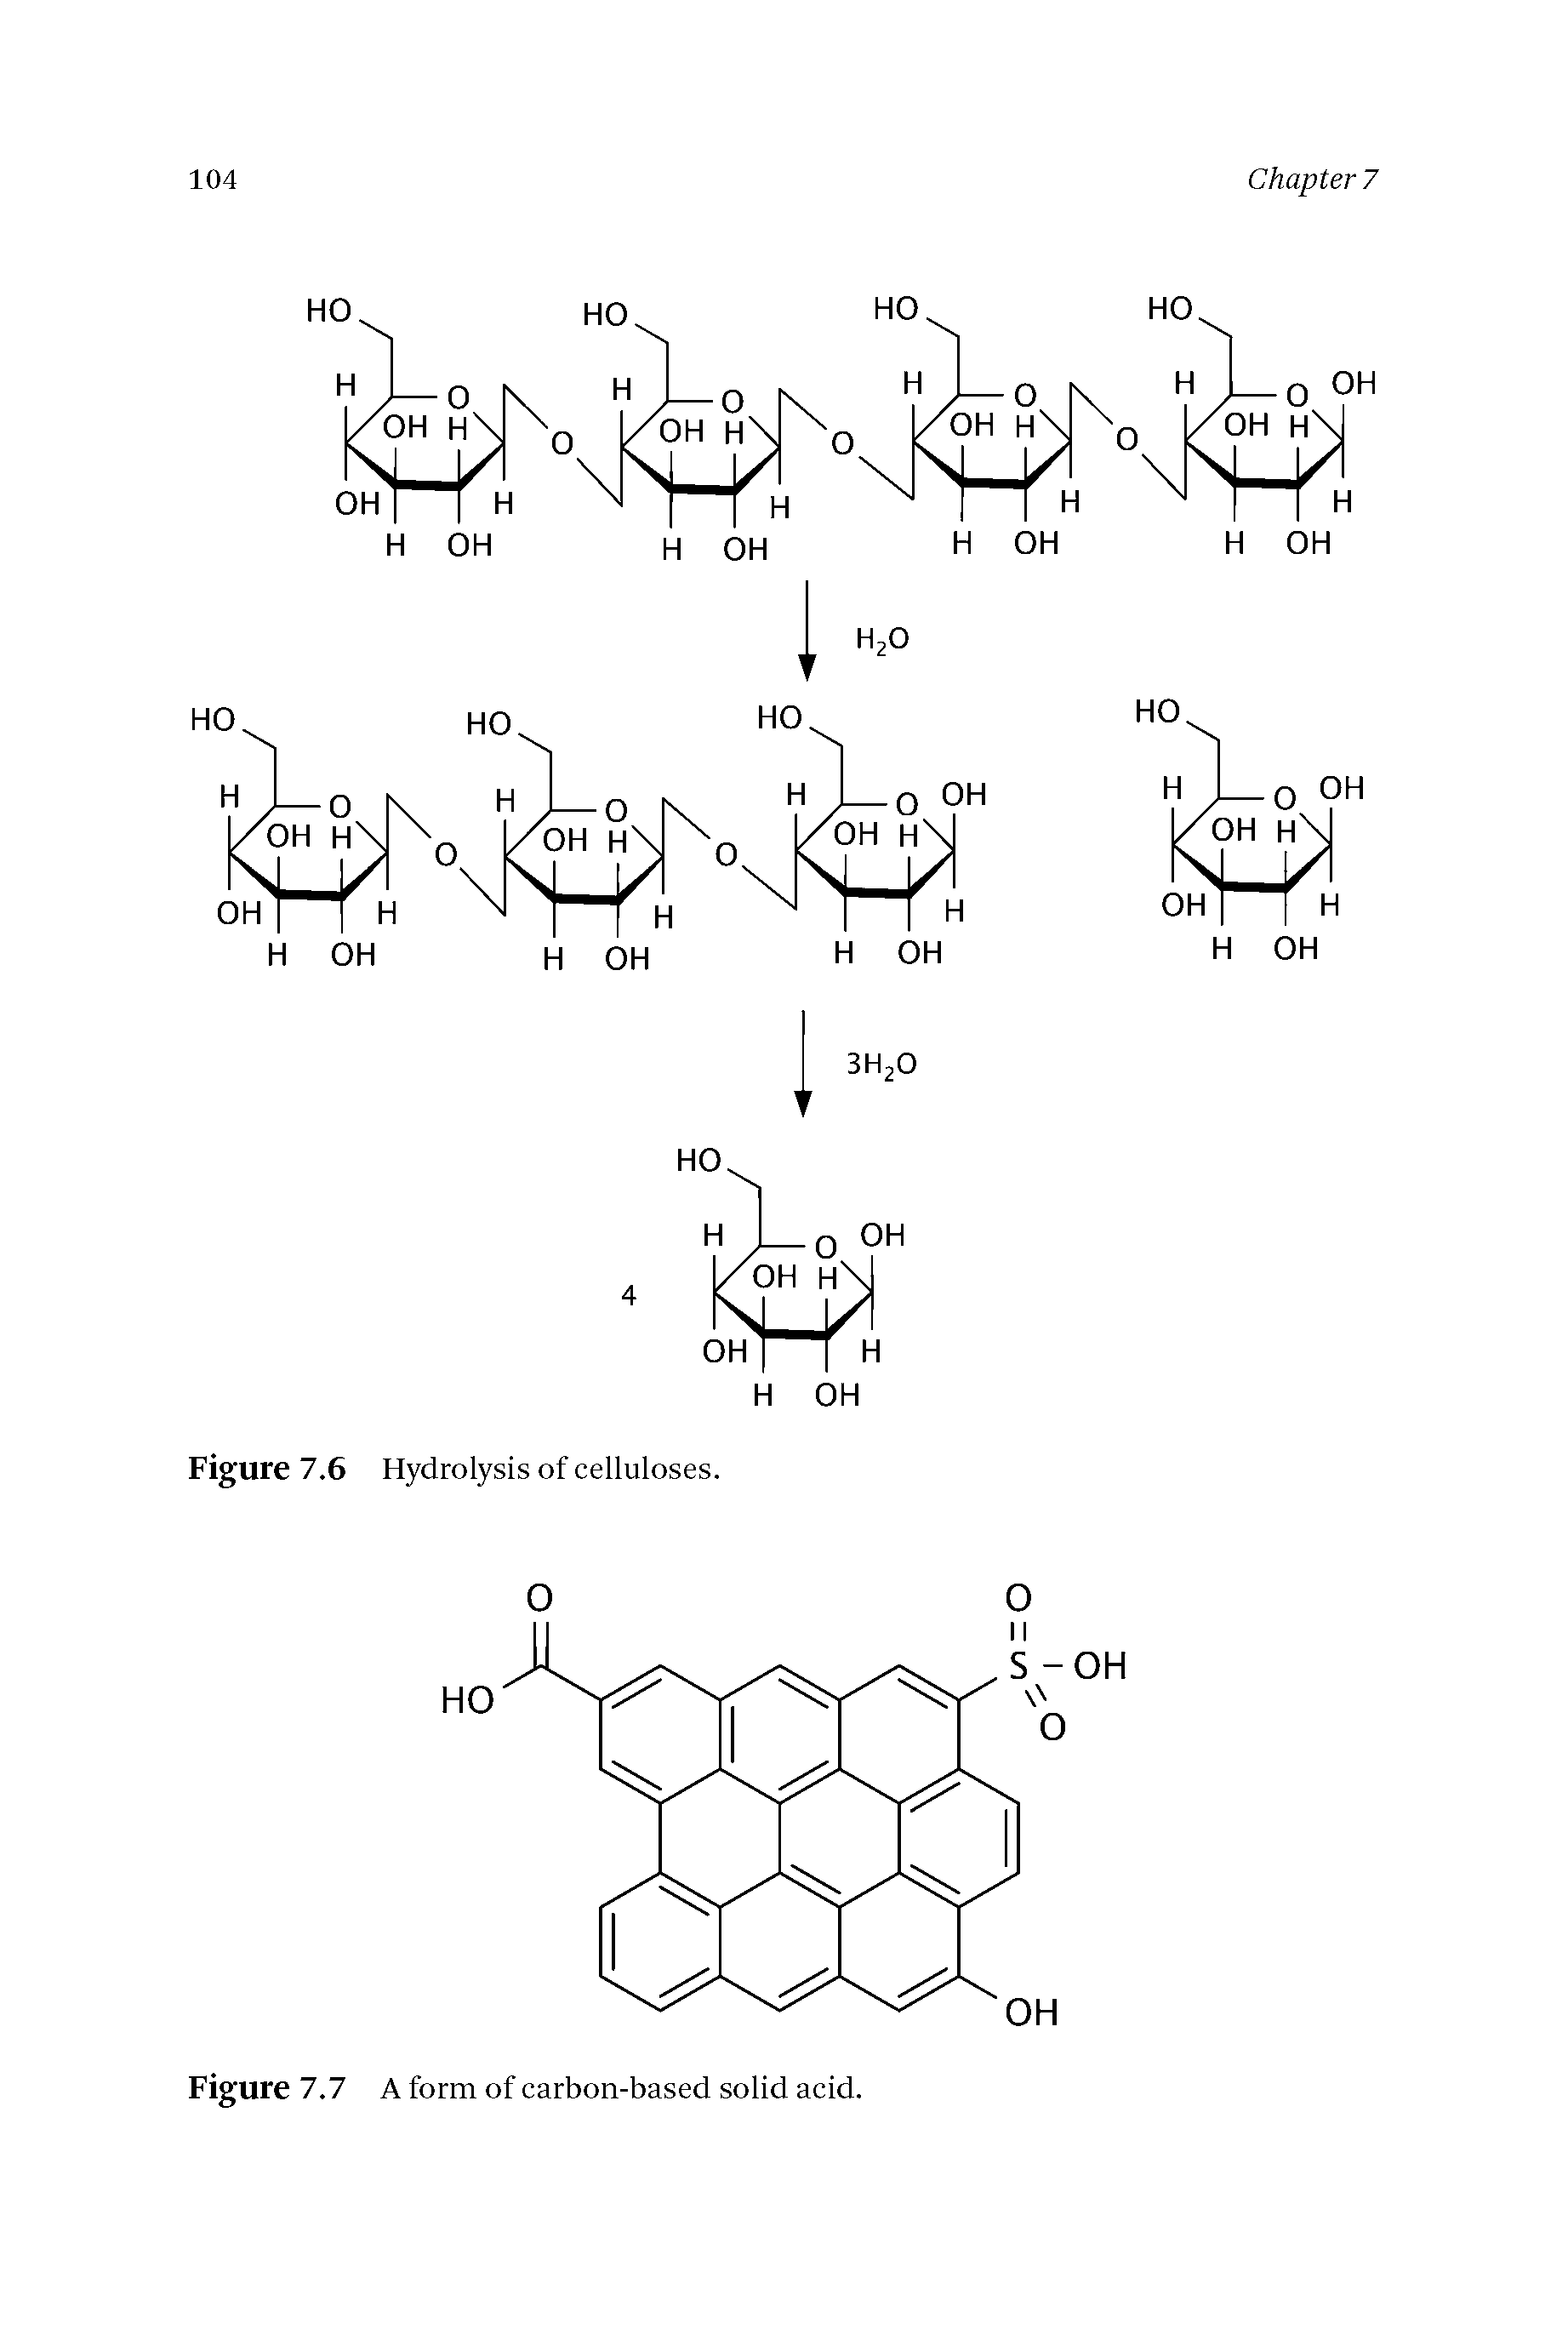 Figure 7.7 A form of carbon-based solid acid.